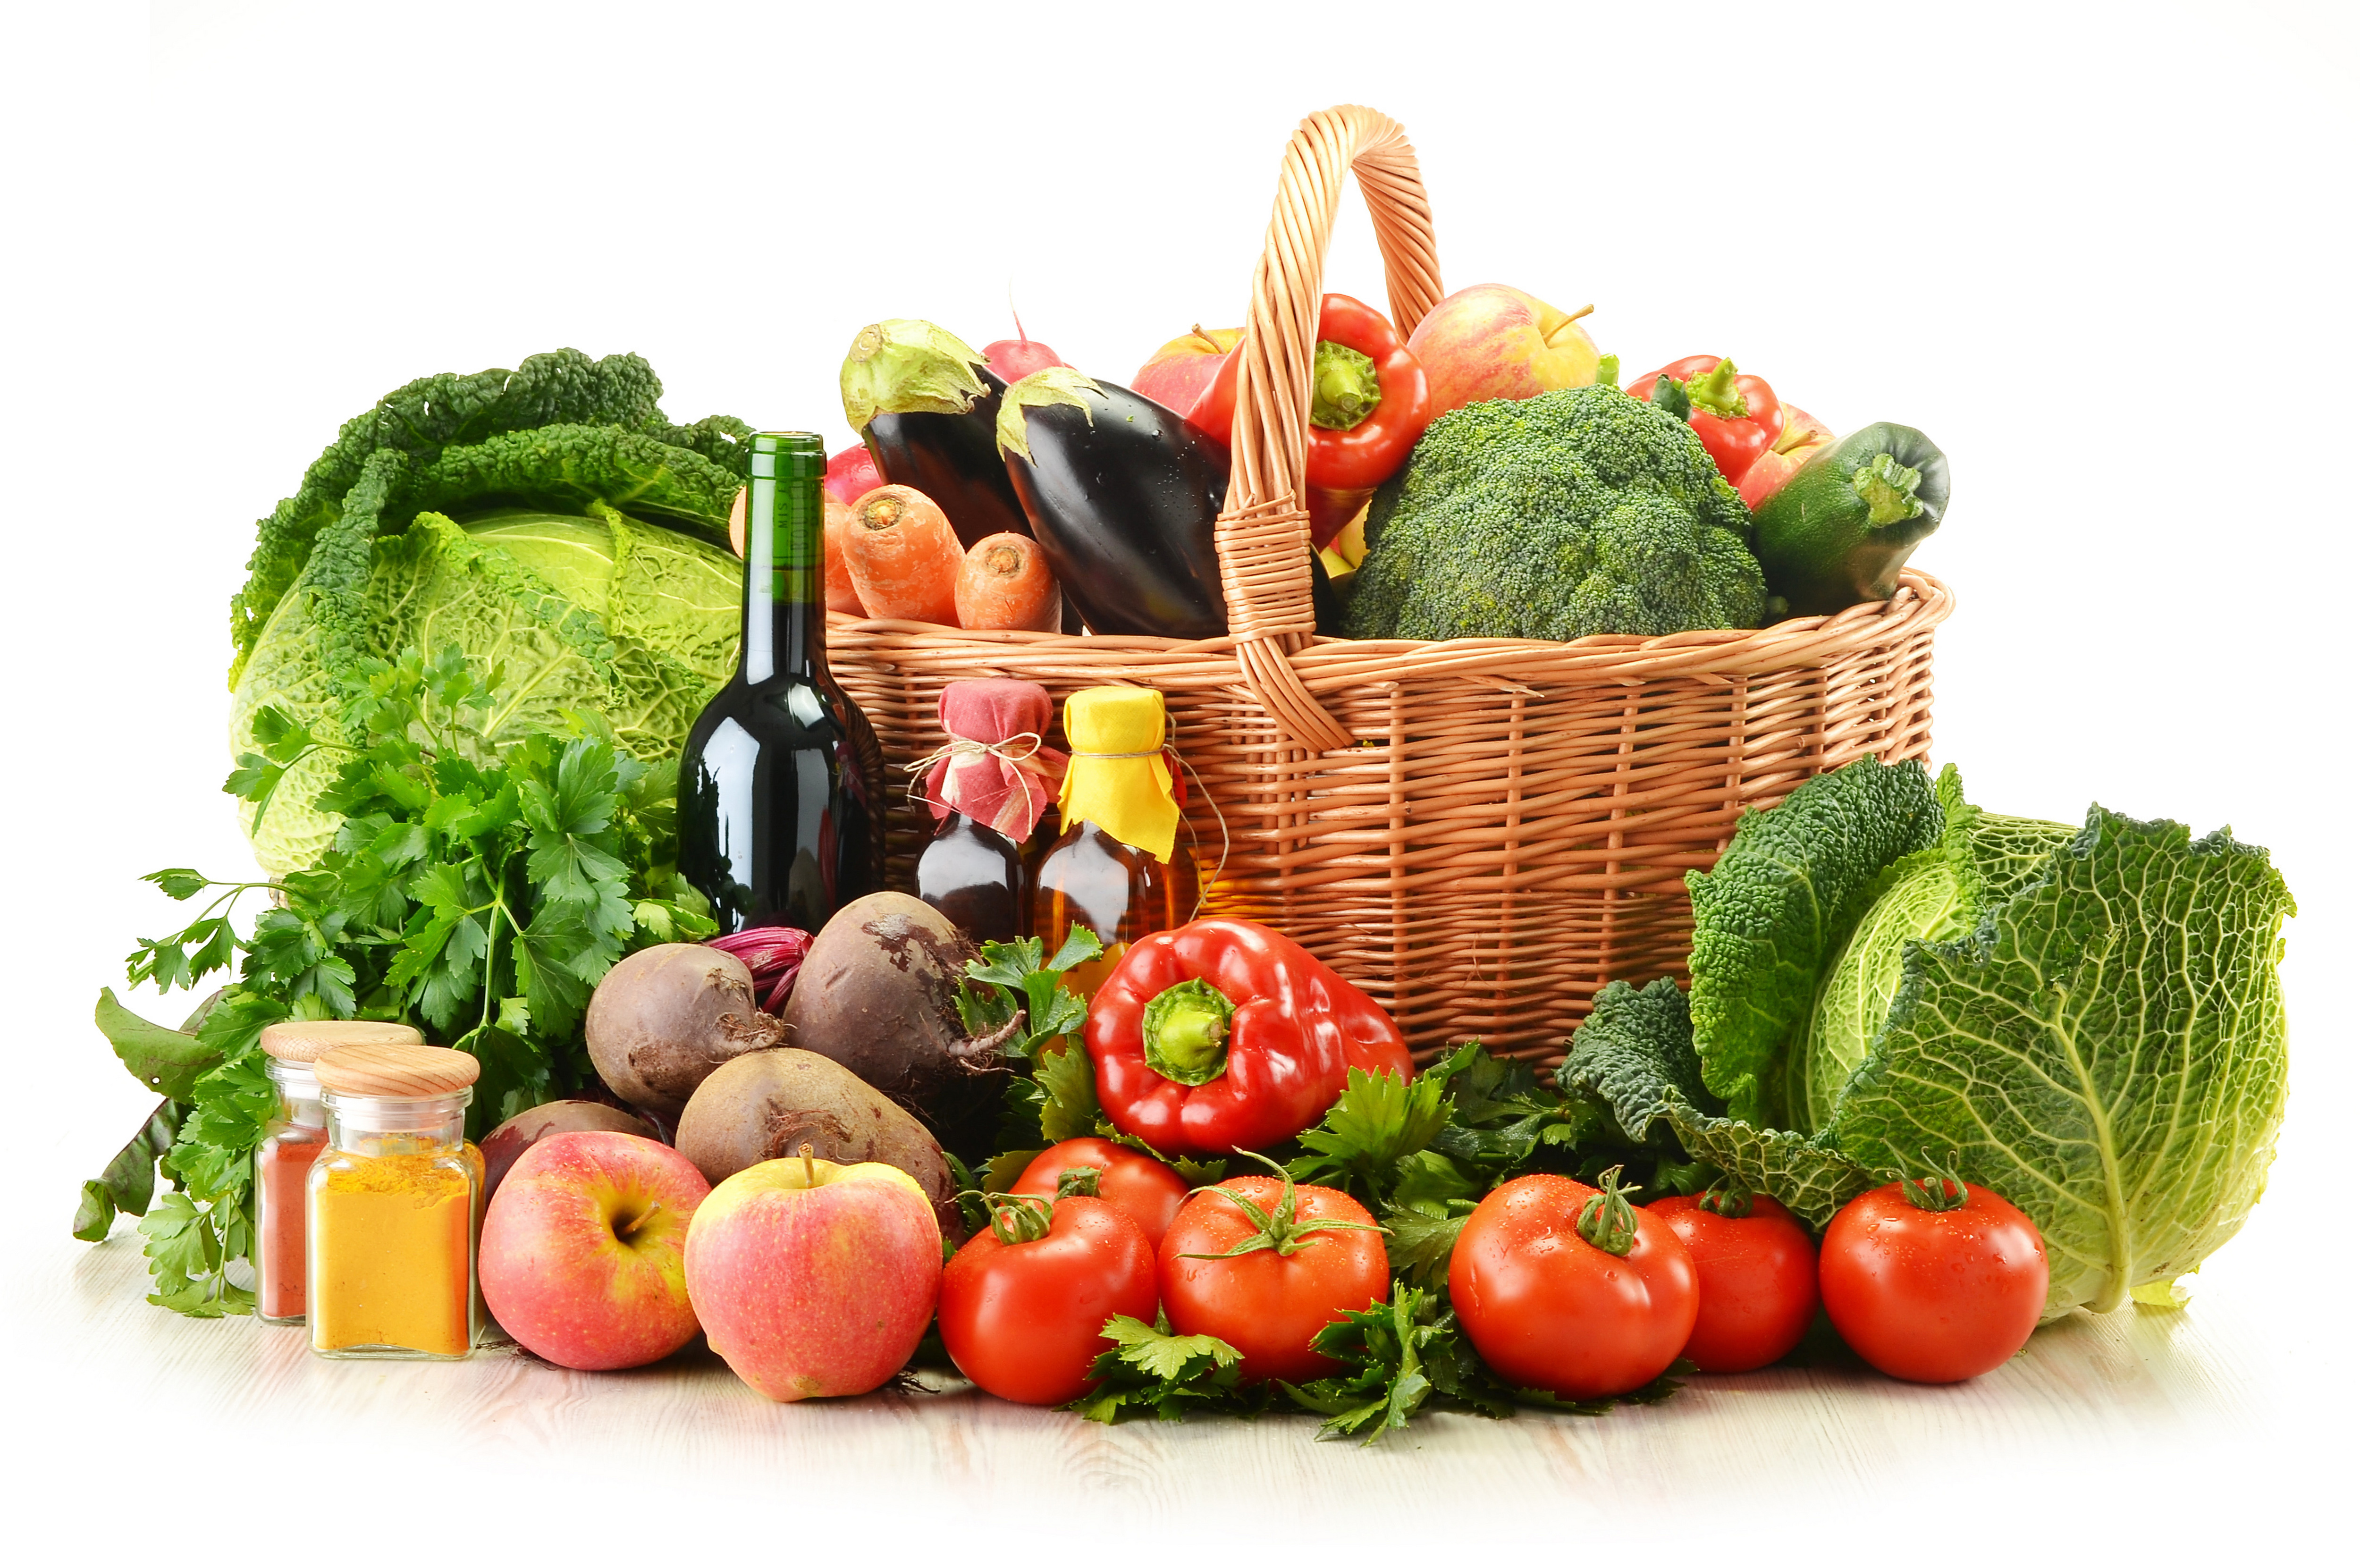 Vegetable products. Продукты. Корзина с продуктами. Овощи и фрукты. Корзинка с овощами.